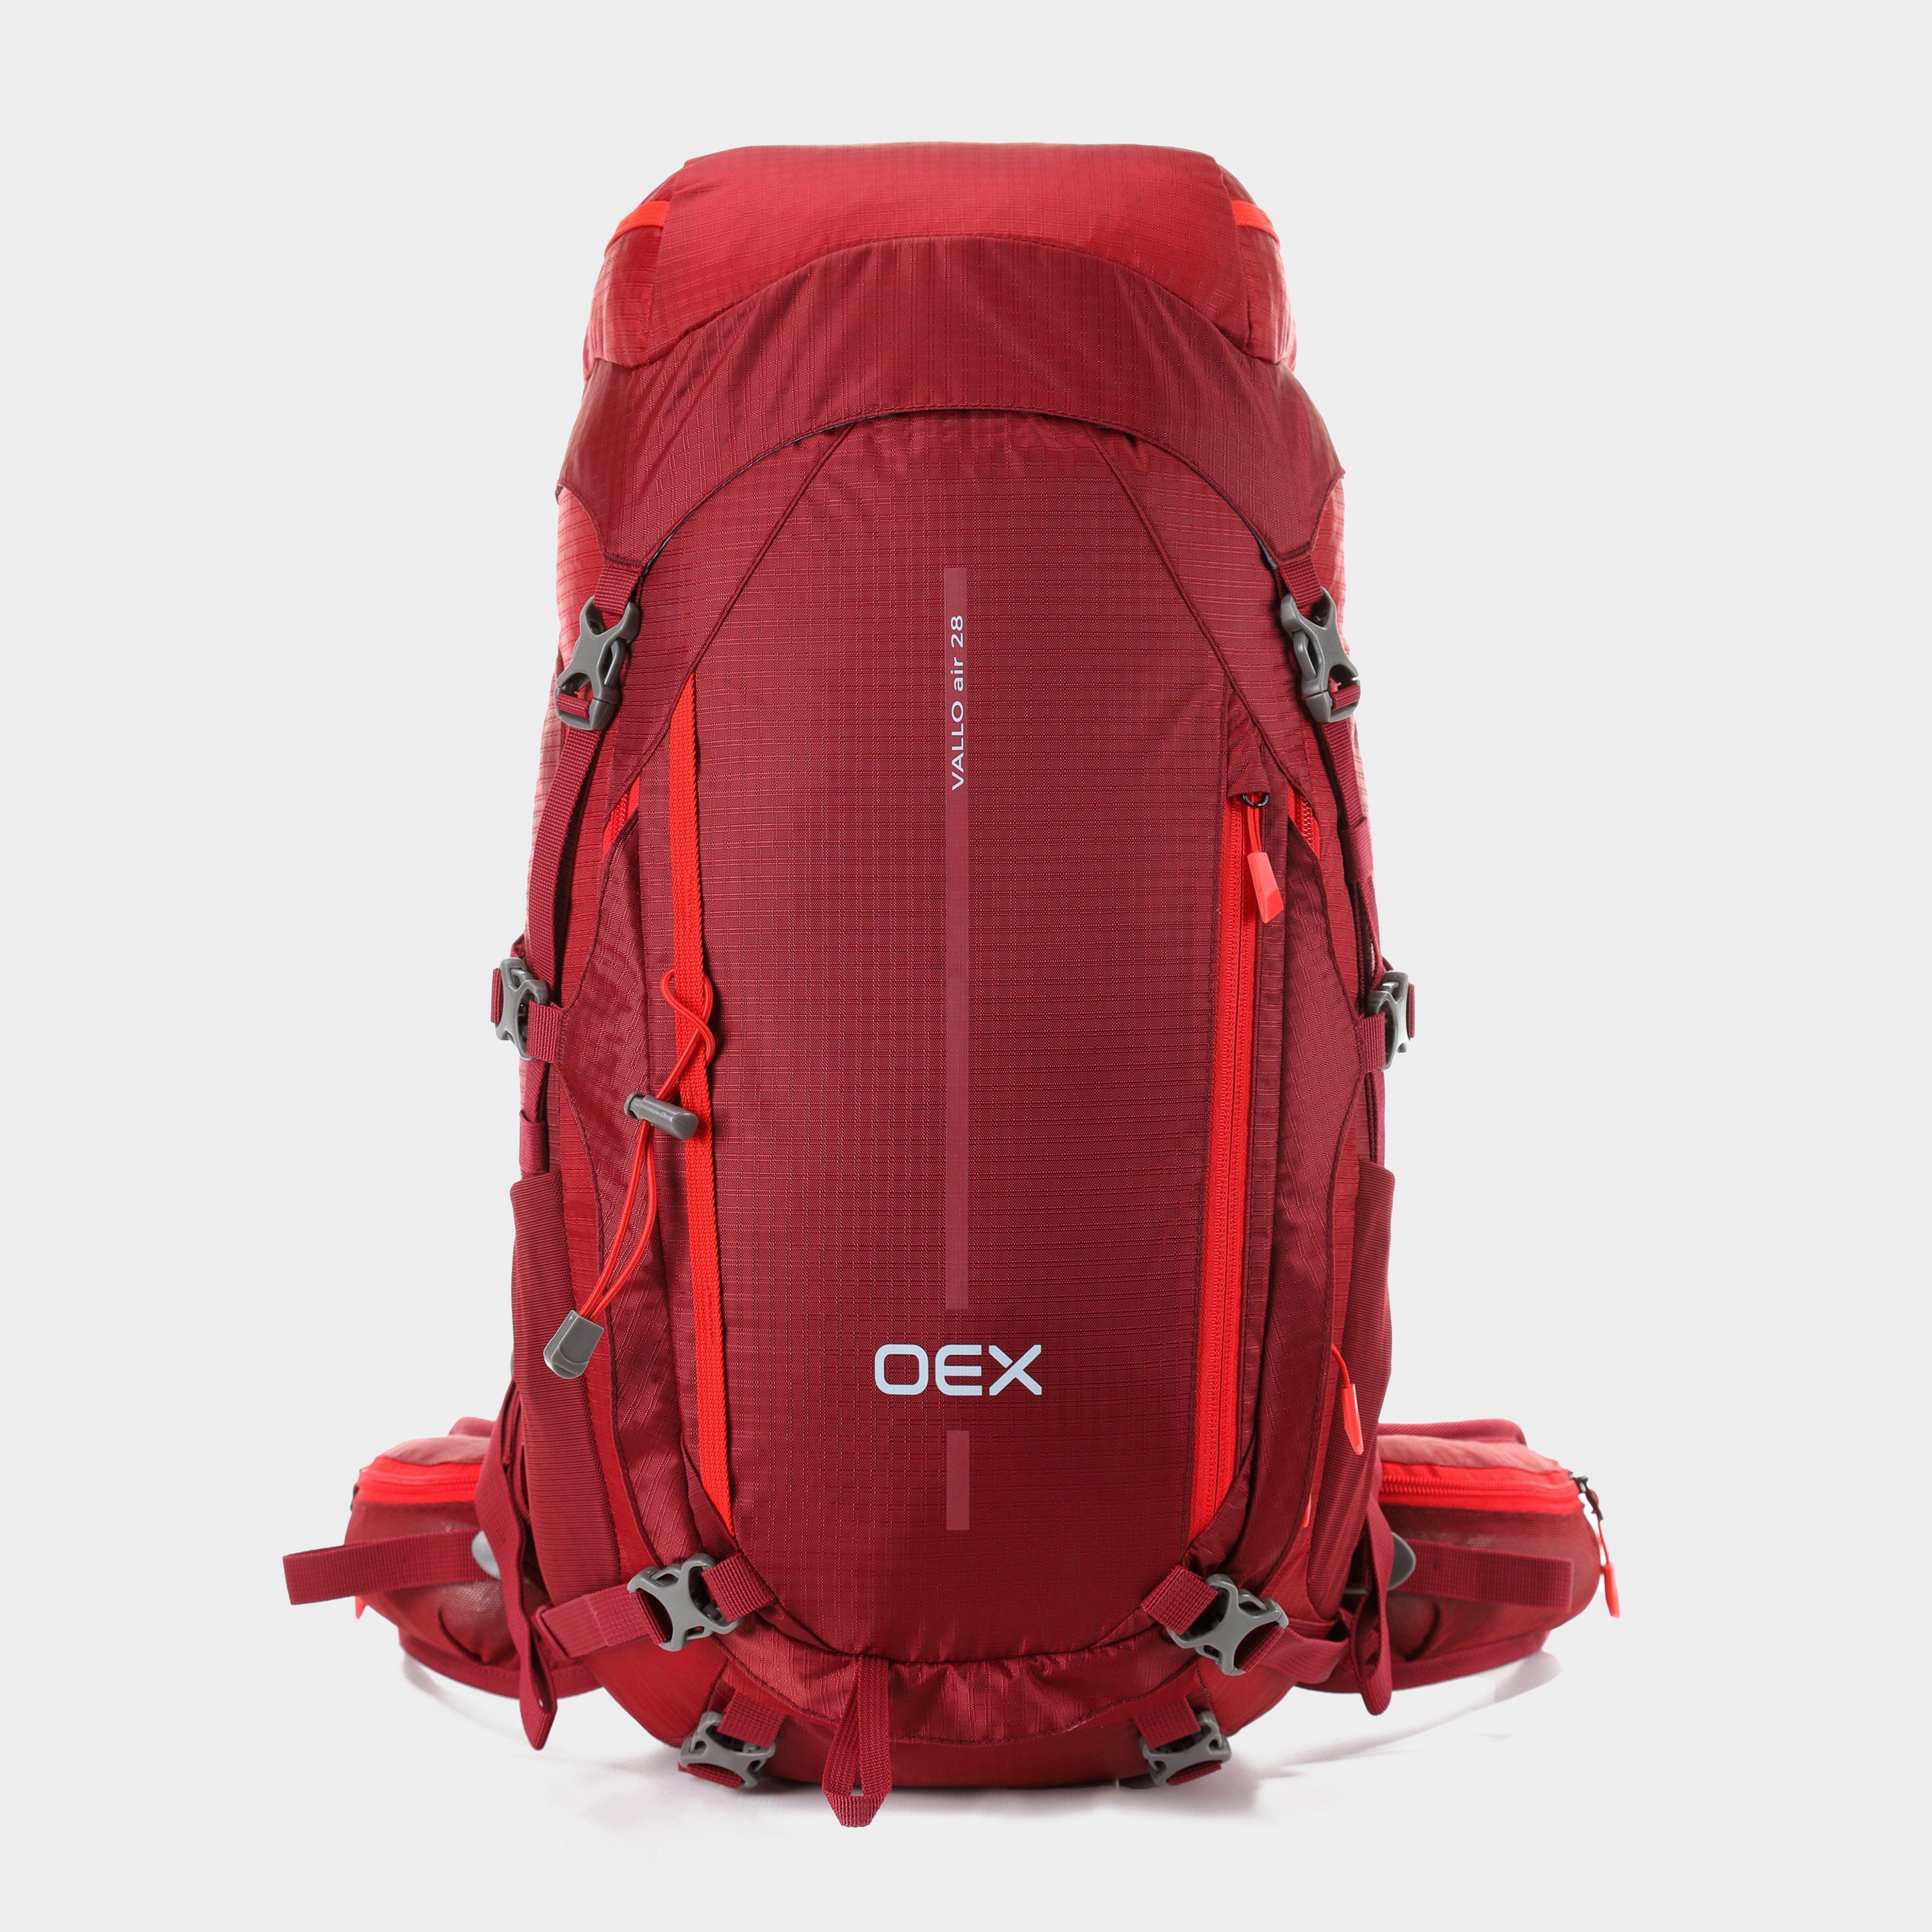 OEX Oex Vallo Air 28 Rucksack - Red, RED